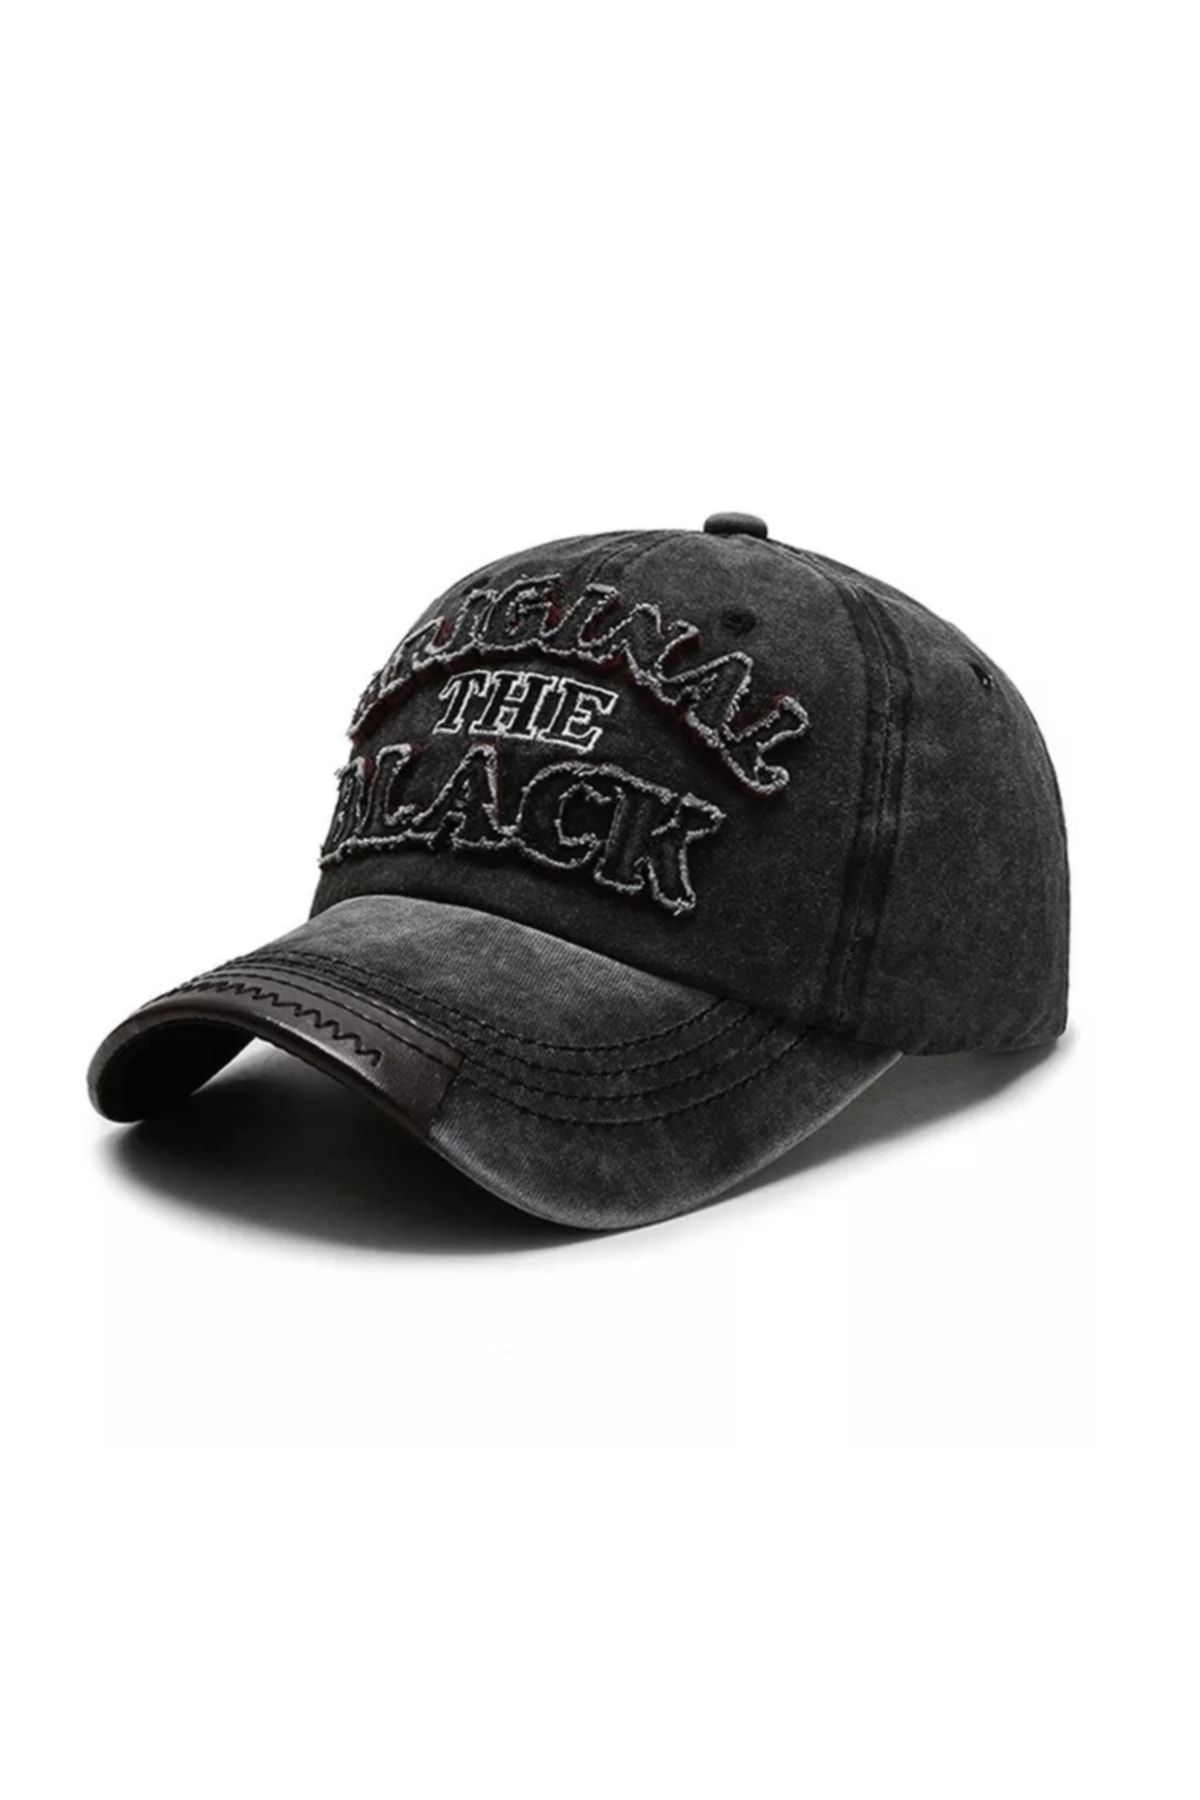 Şapka Market Original Black Siyah Beyzbol Şapka